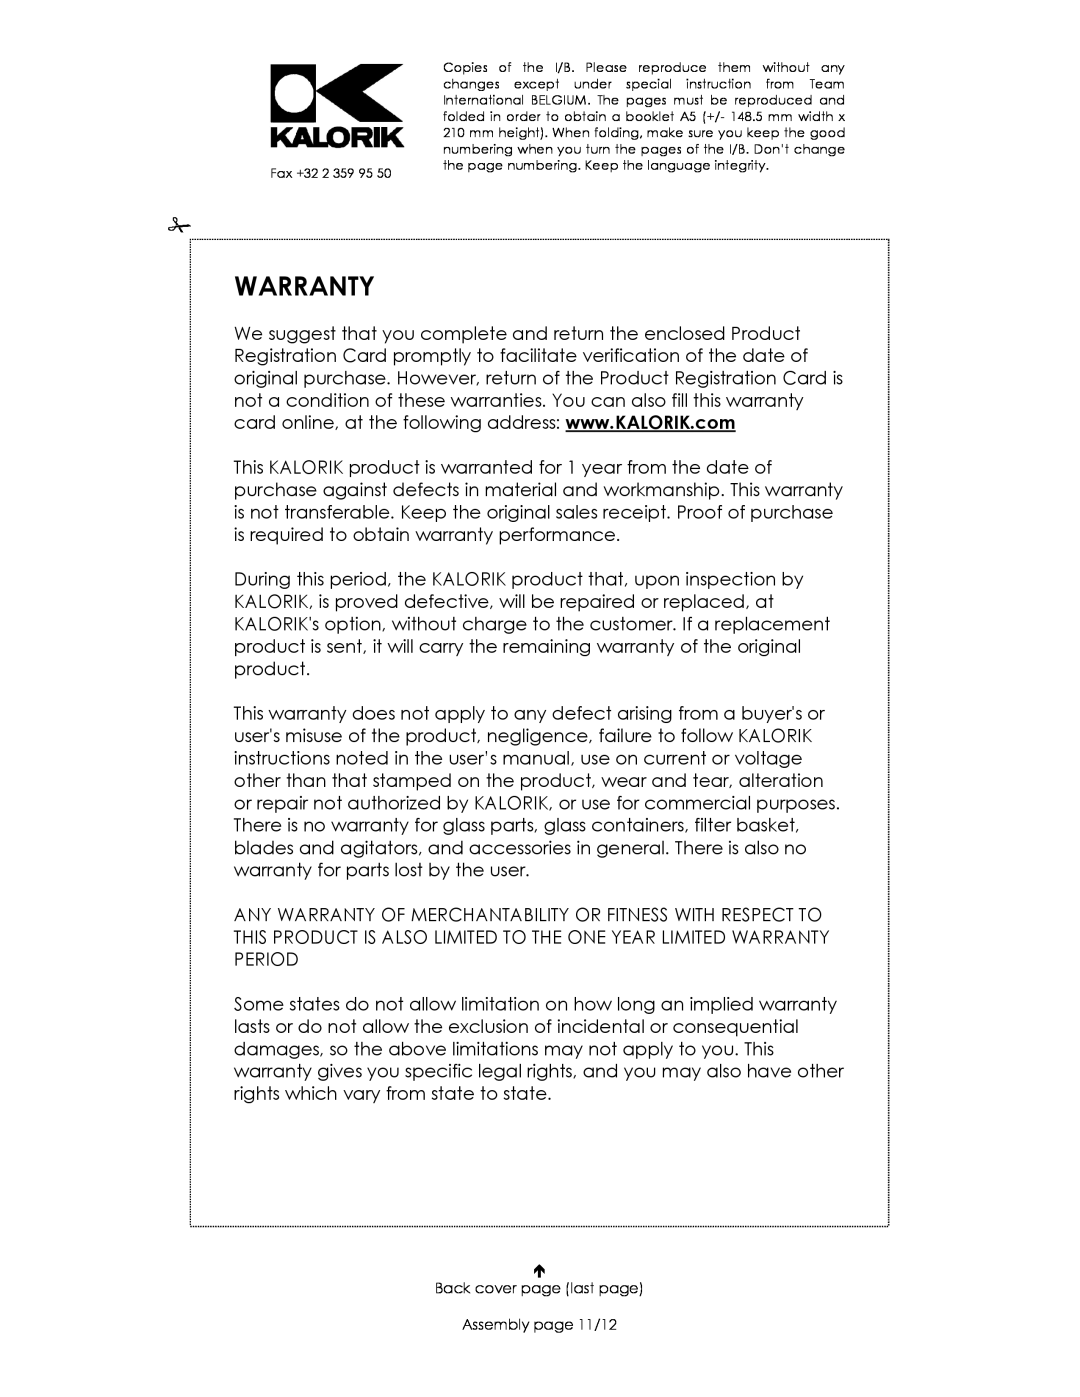 Kalorik USK DG 16271 manual Warranty, Back cover page last page Assembly page 11/12 